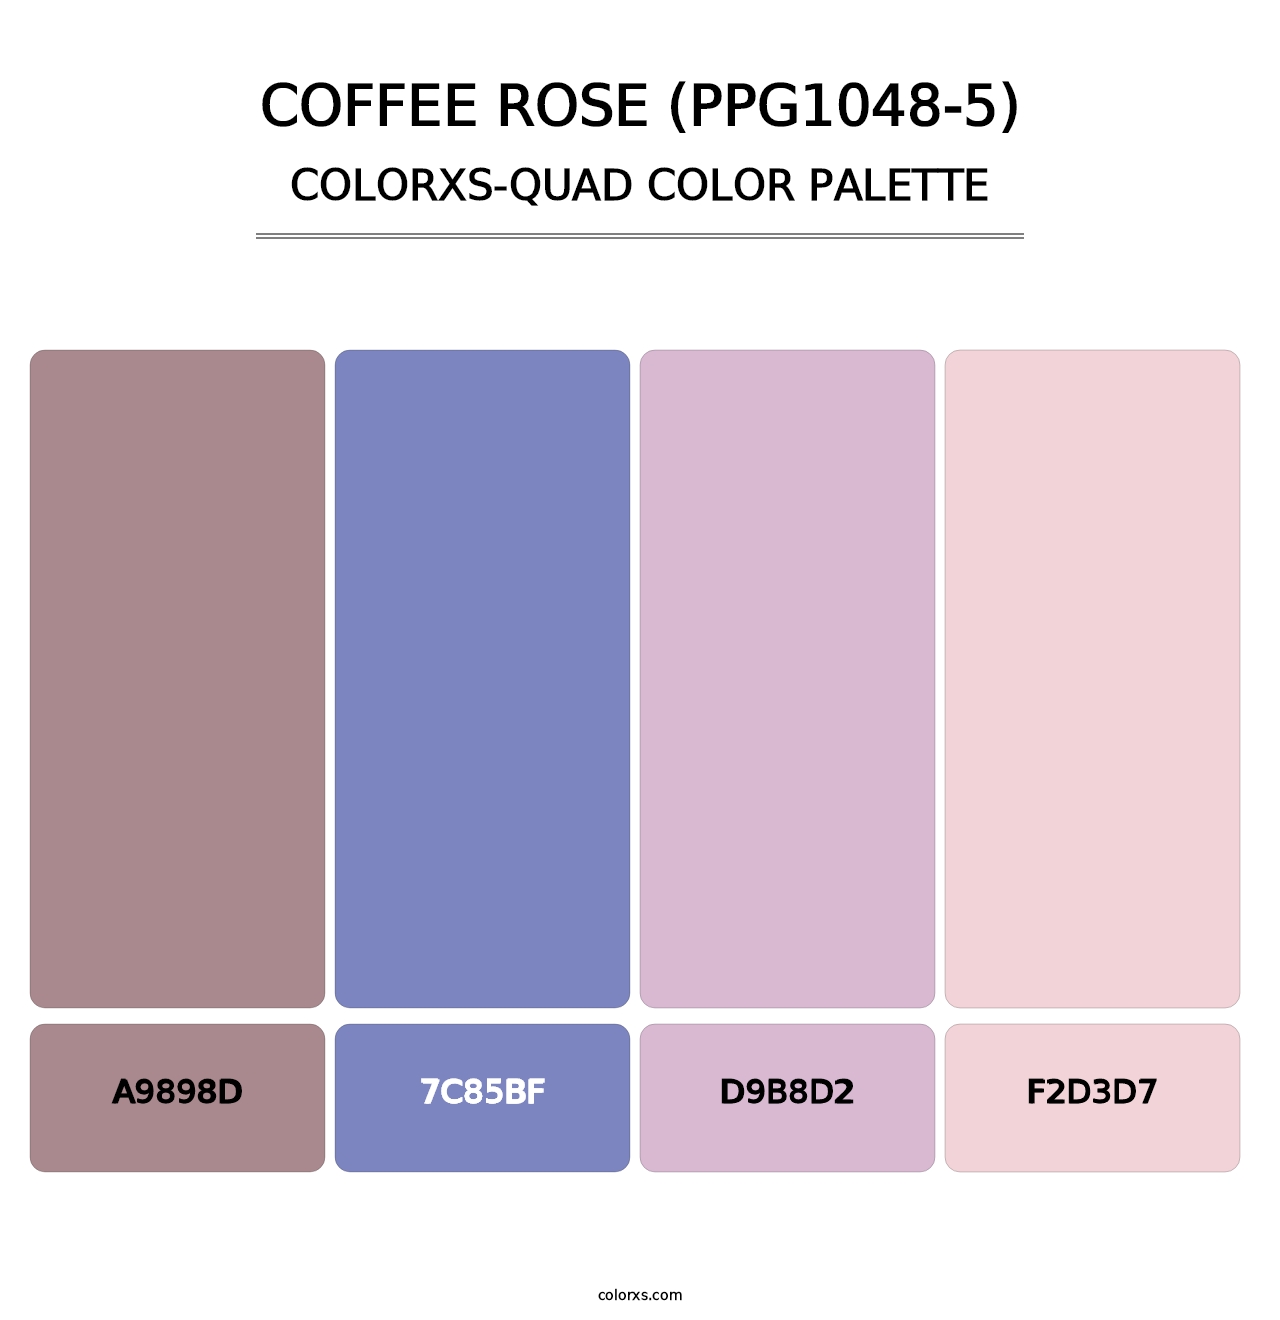 Coffee Rose (PPG1048-5) - Colorxs Quad Palette